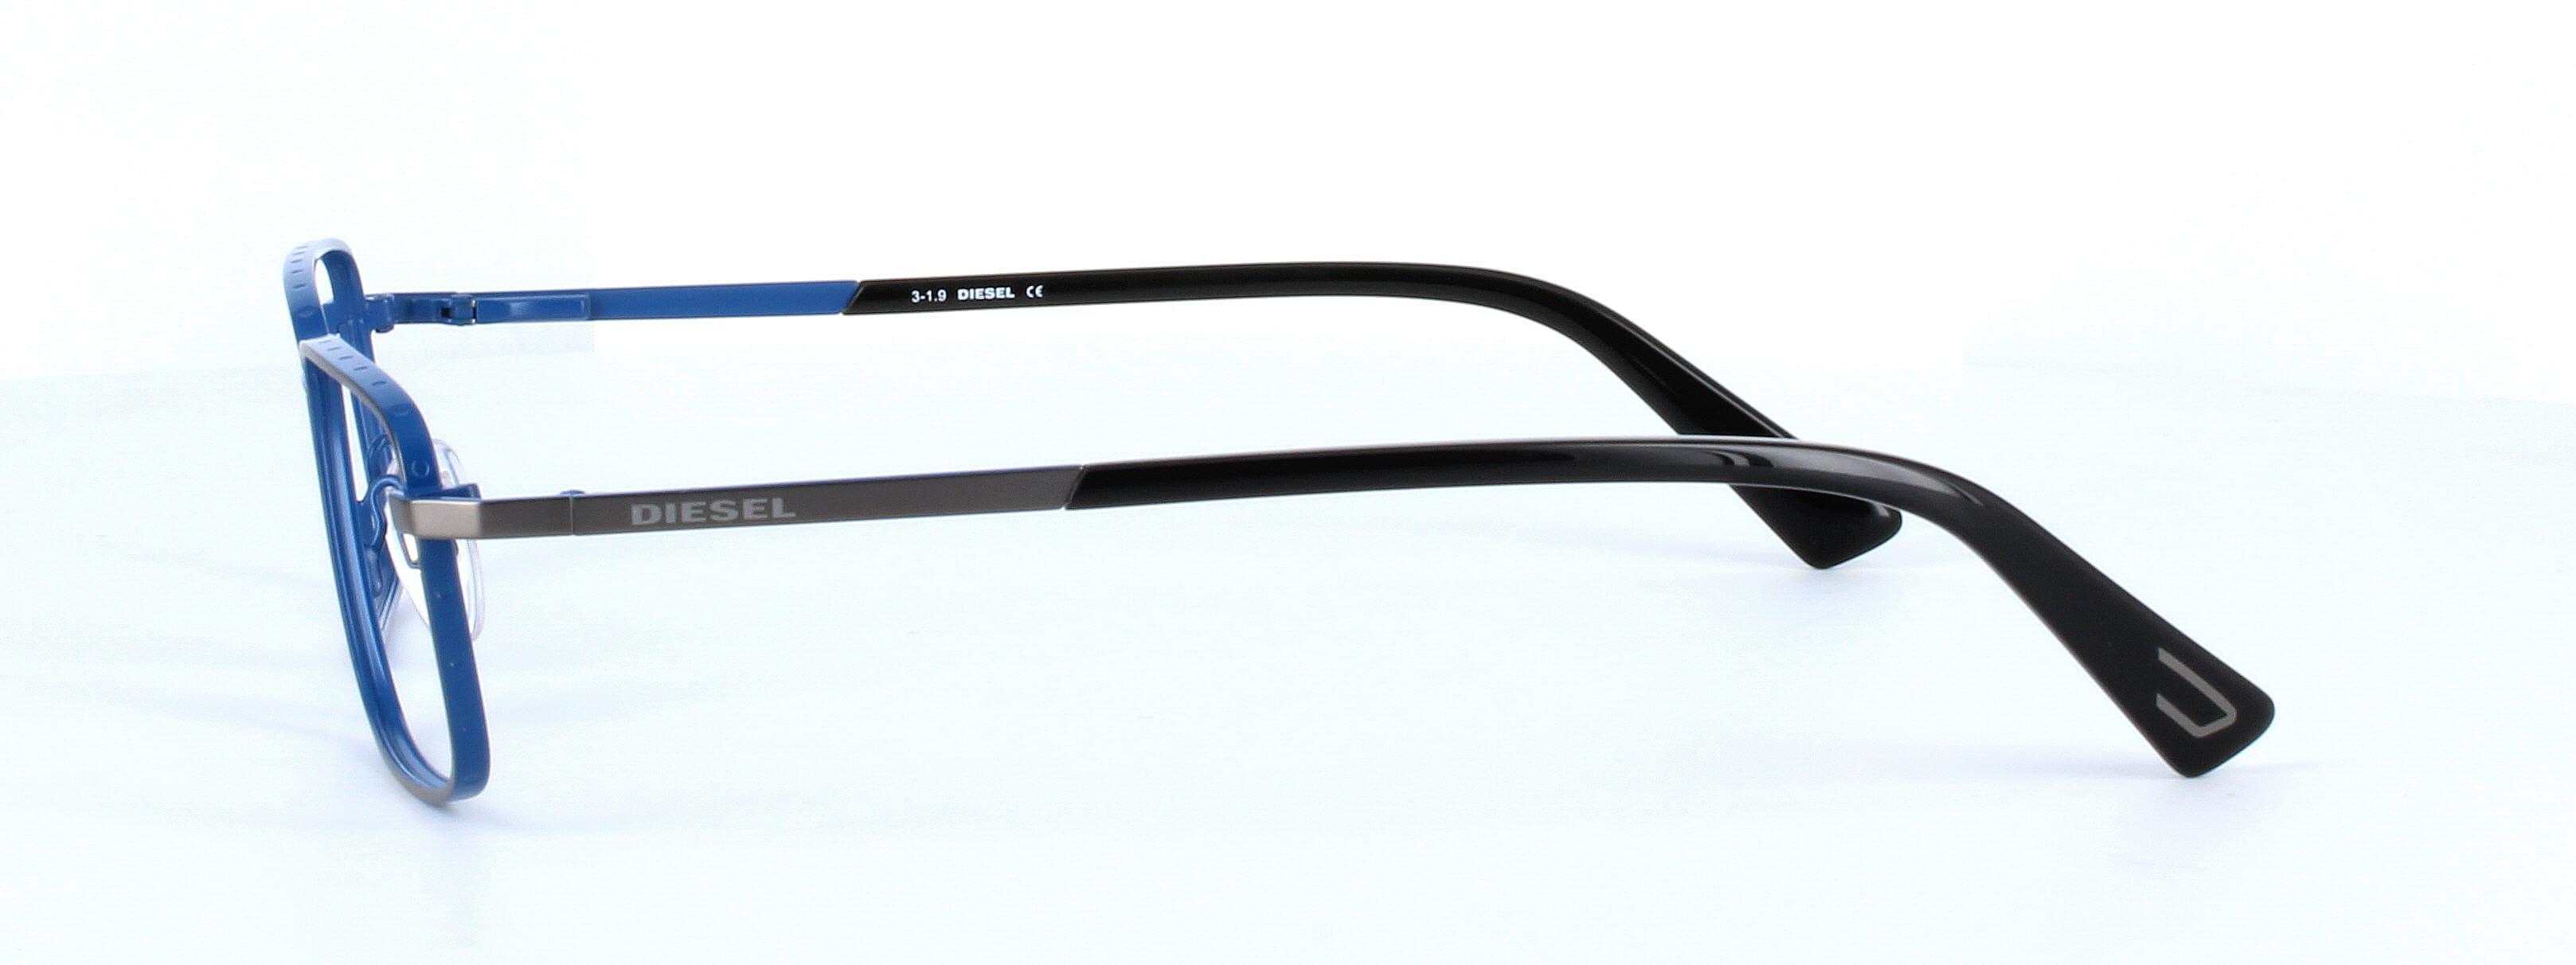 Diesel 5273 - Unisex designer glasses - 2 tone full rim rectangular shaped metal frame on gunmetal and blue - image view 2